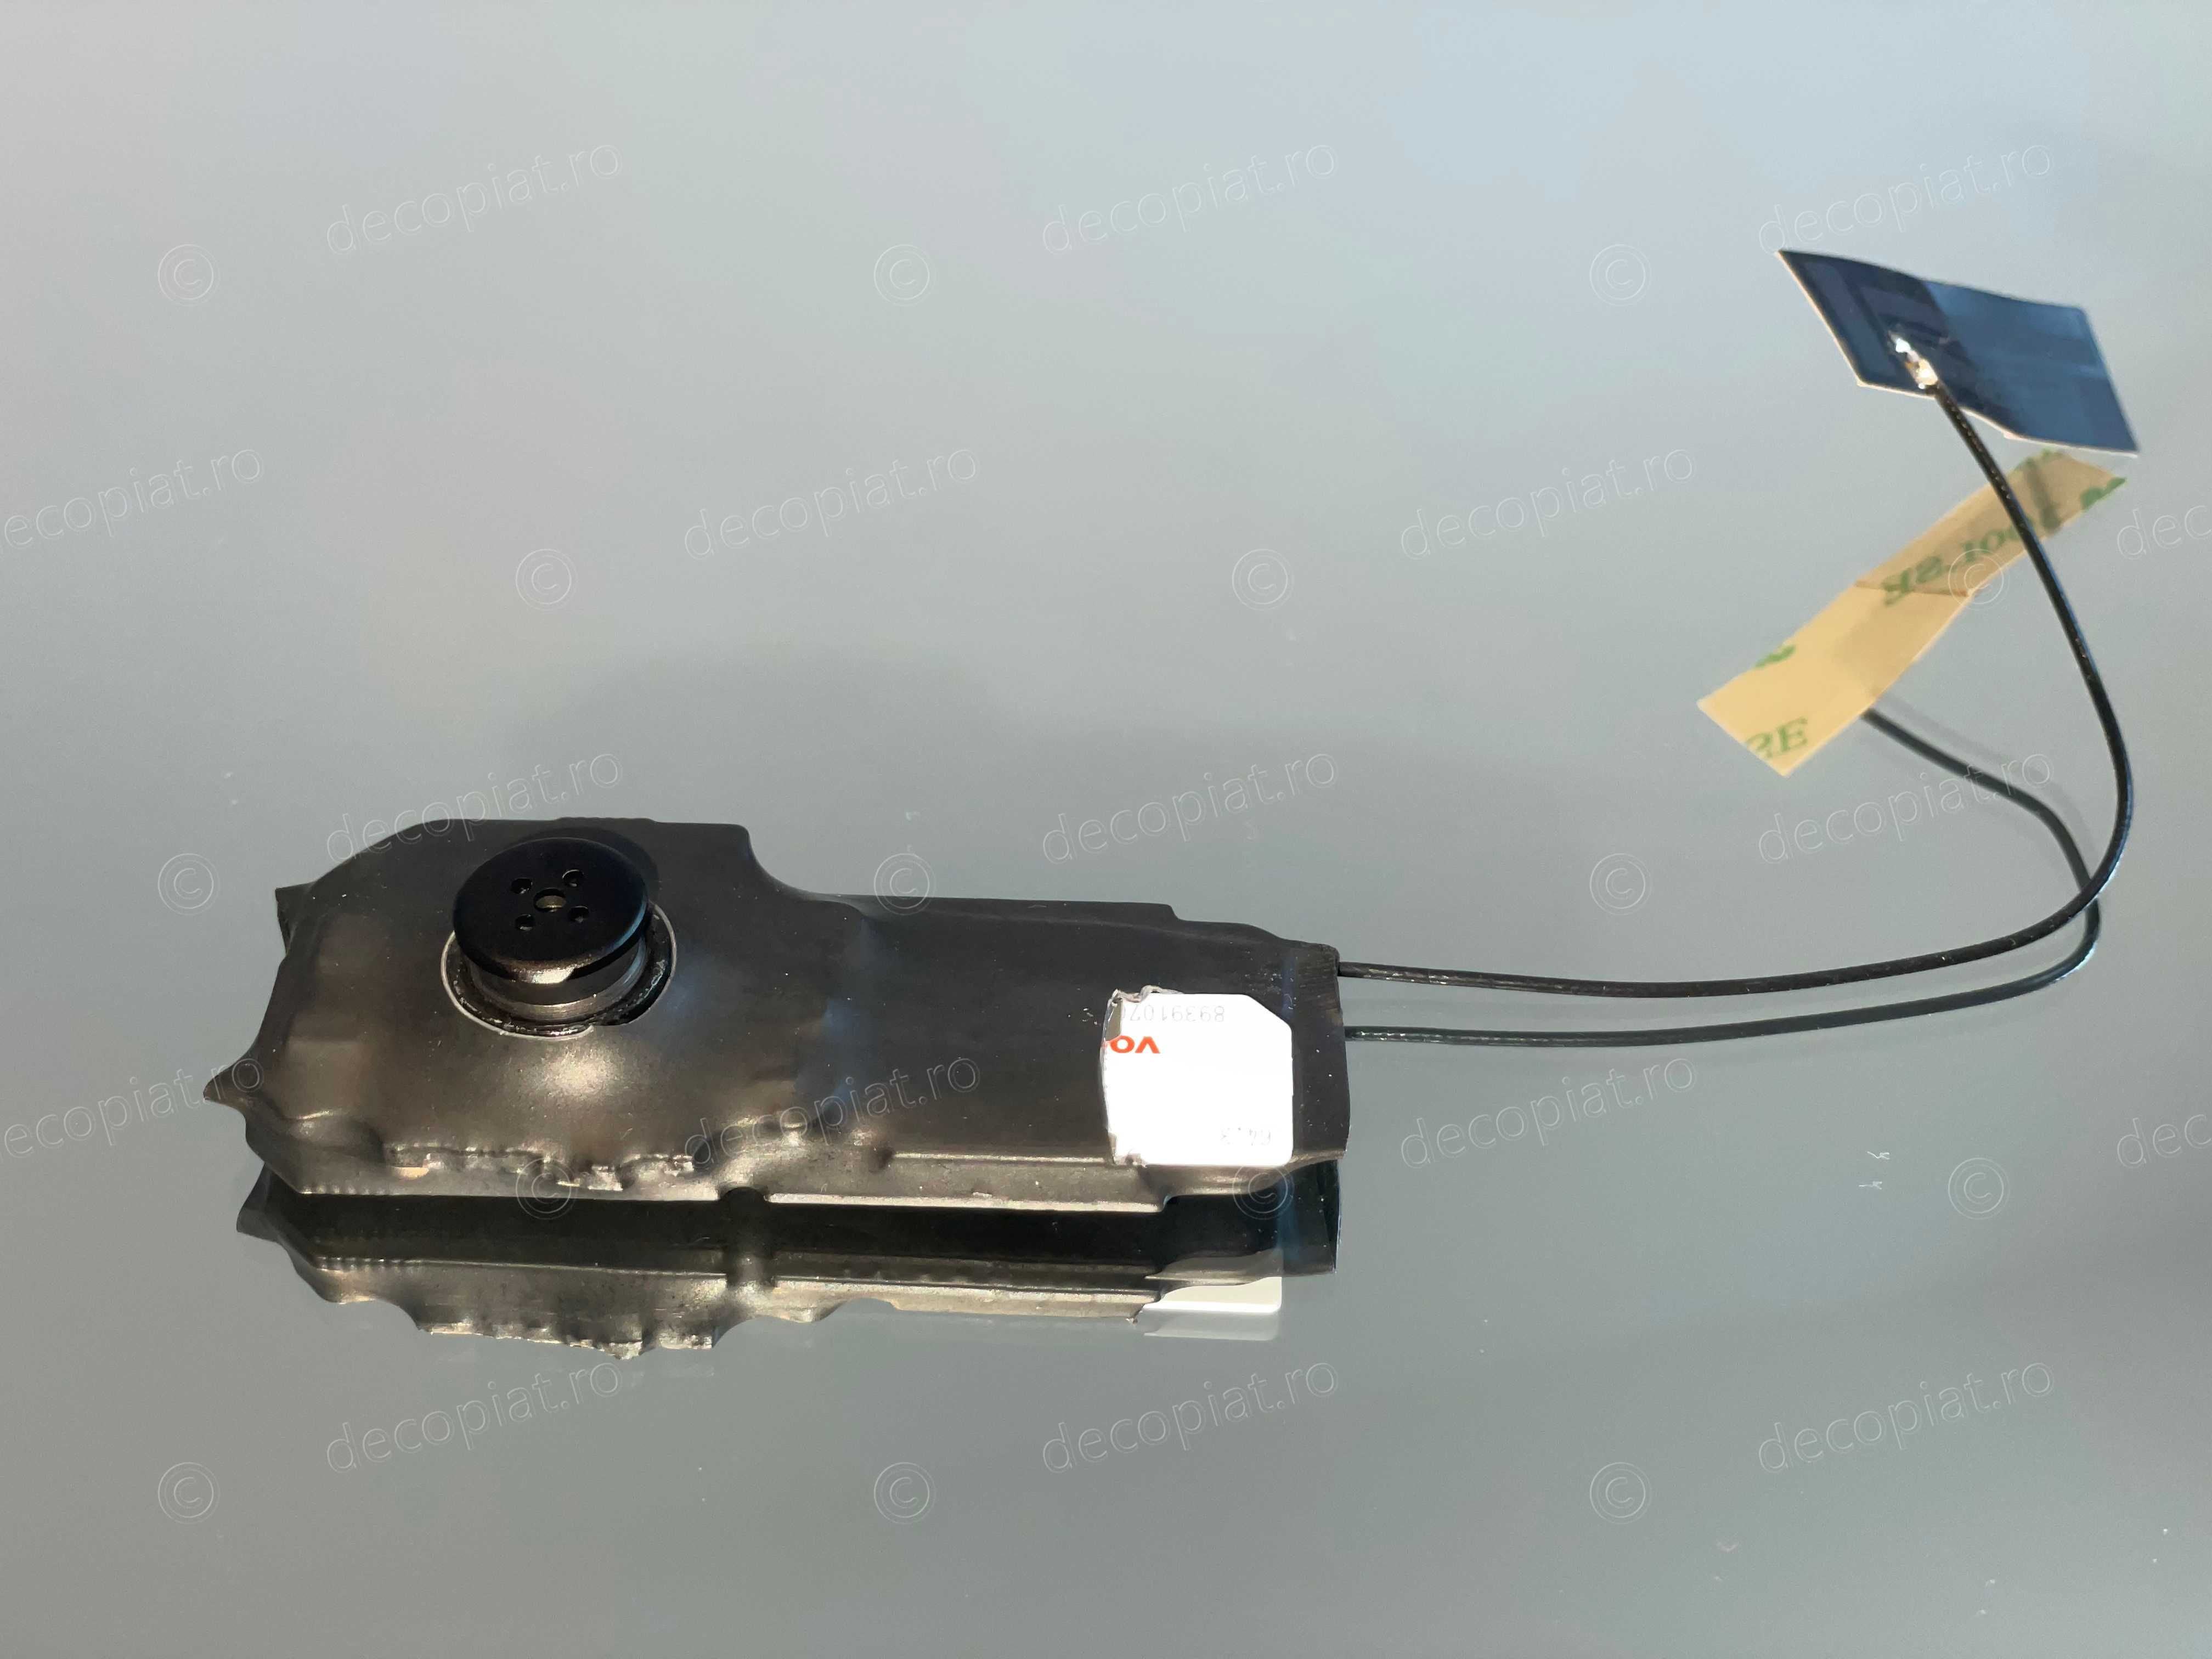 casca sistem de copiat camera video iCHeat5 pro in nasture